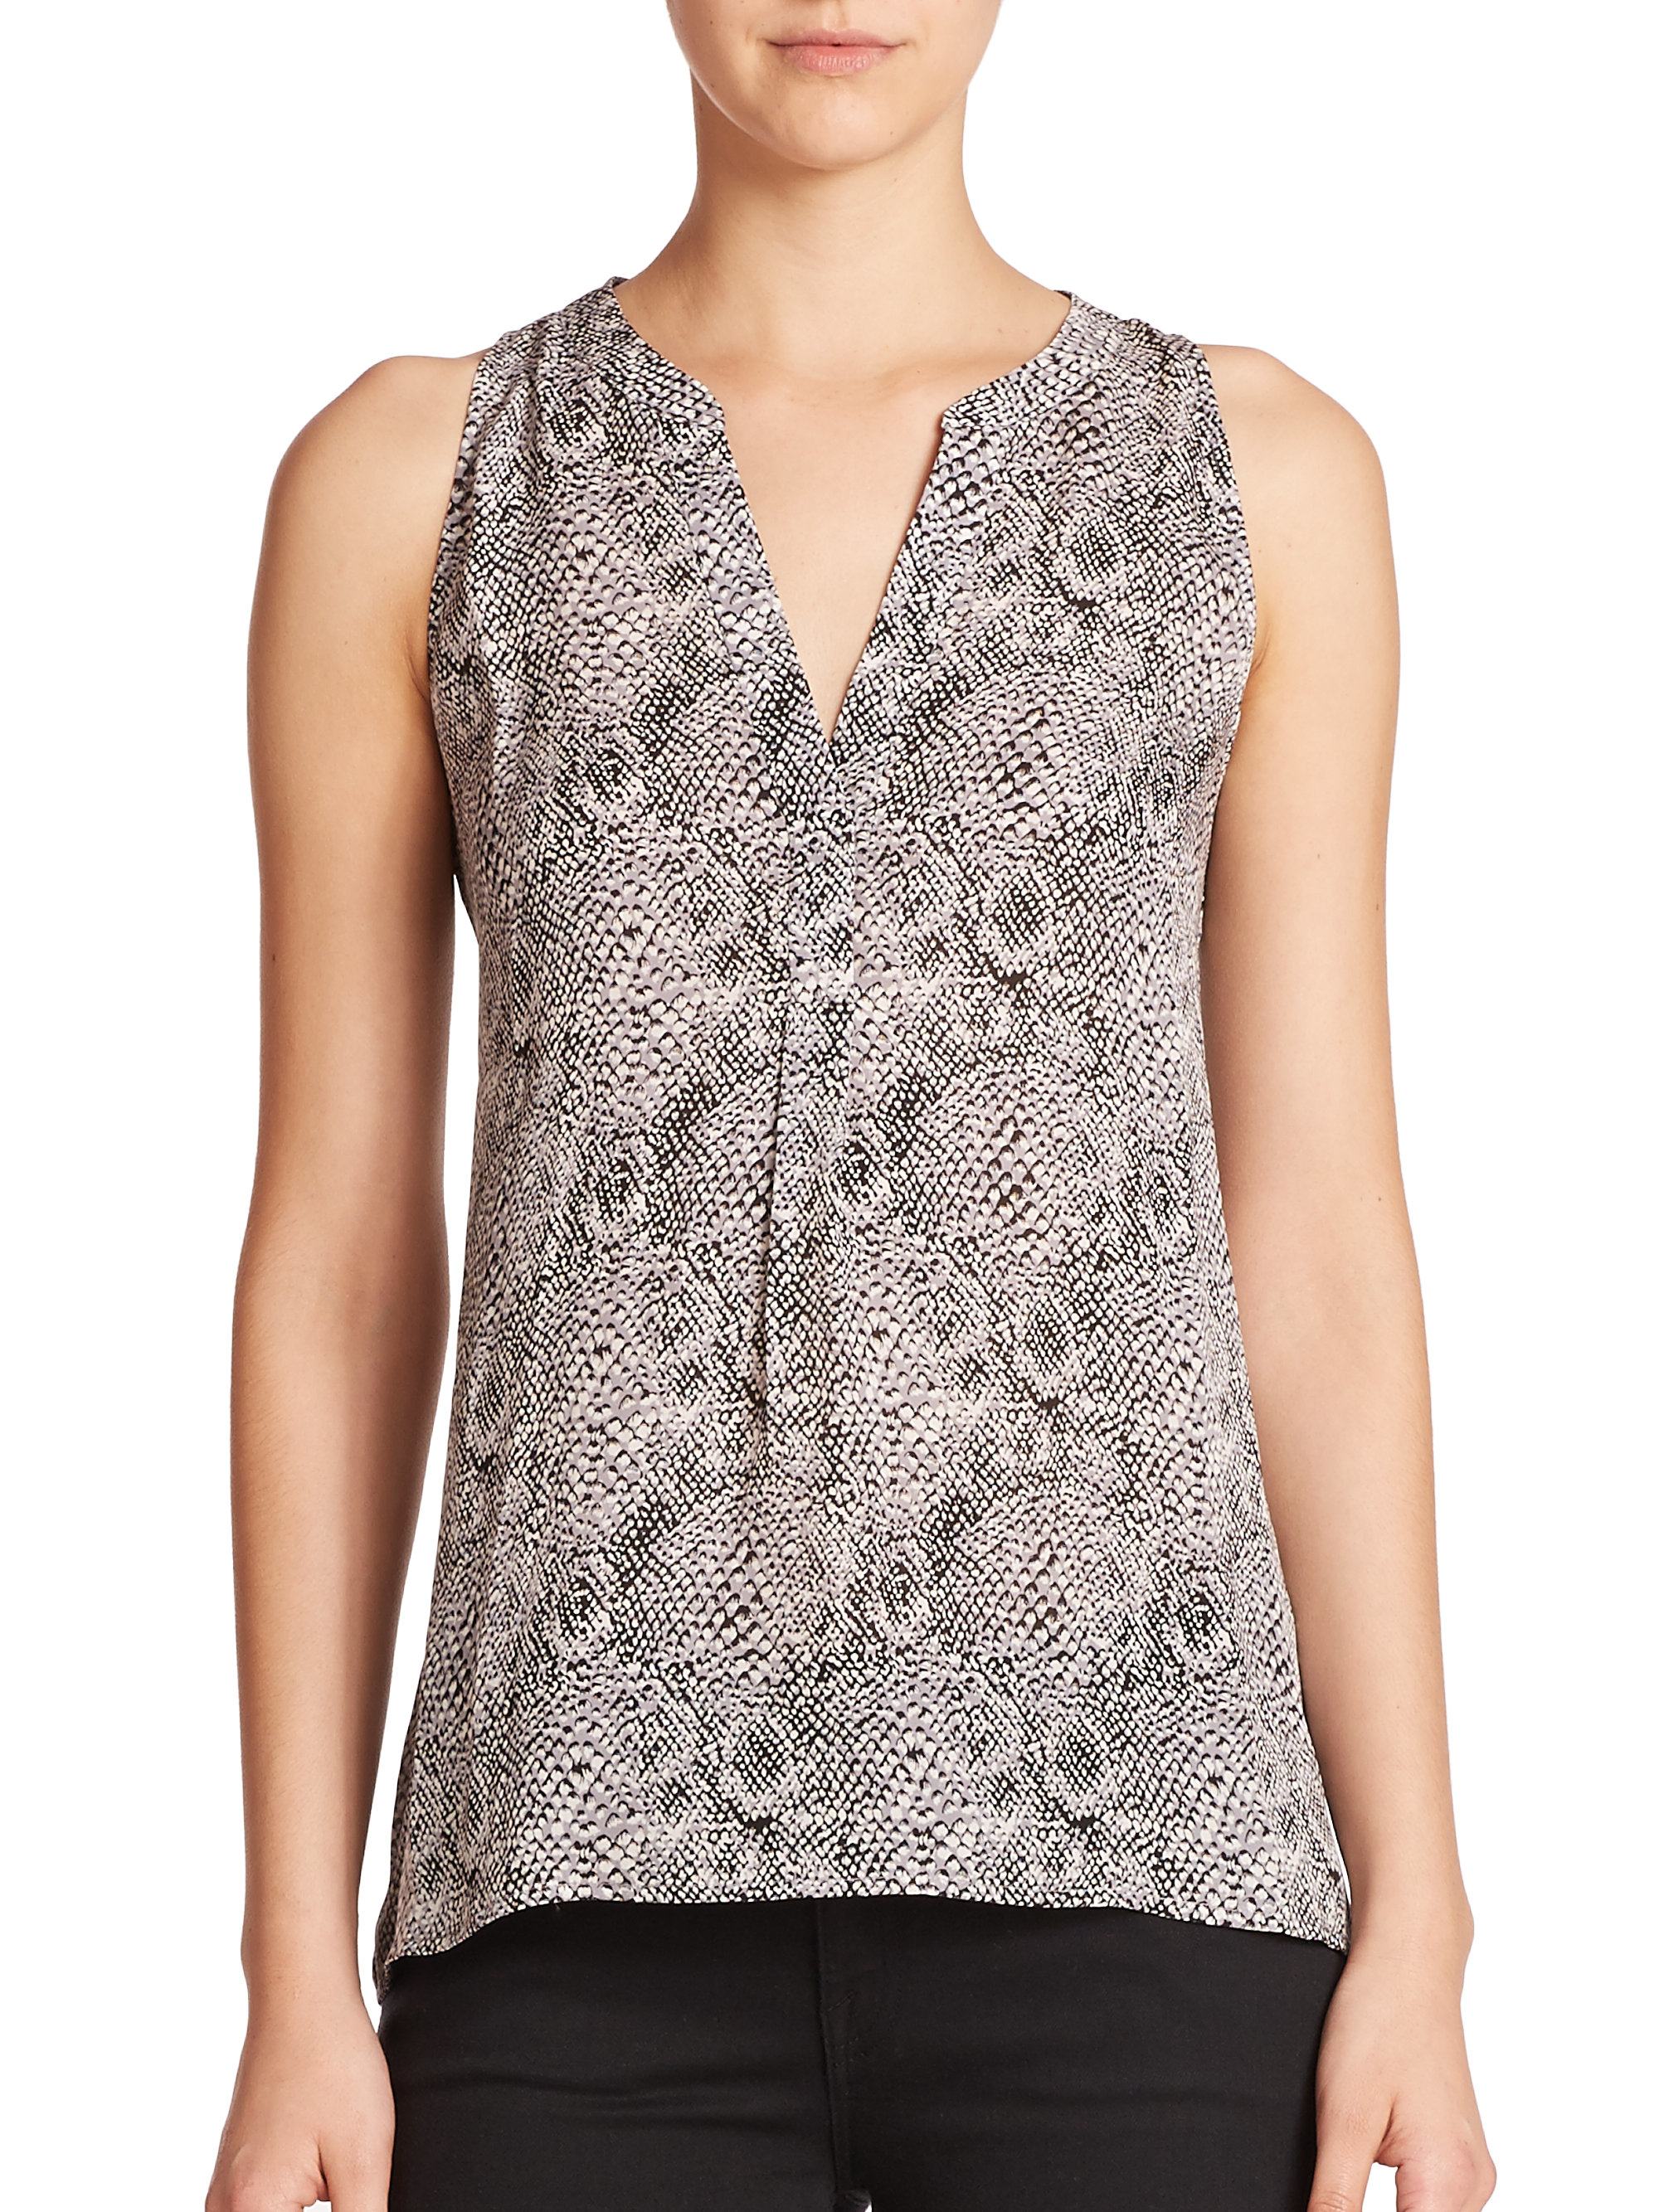 Lyst - Joie Aruna Silk Python-print Sleeveless Blouse in Gray